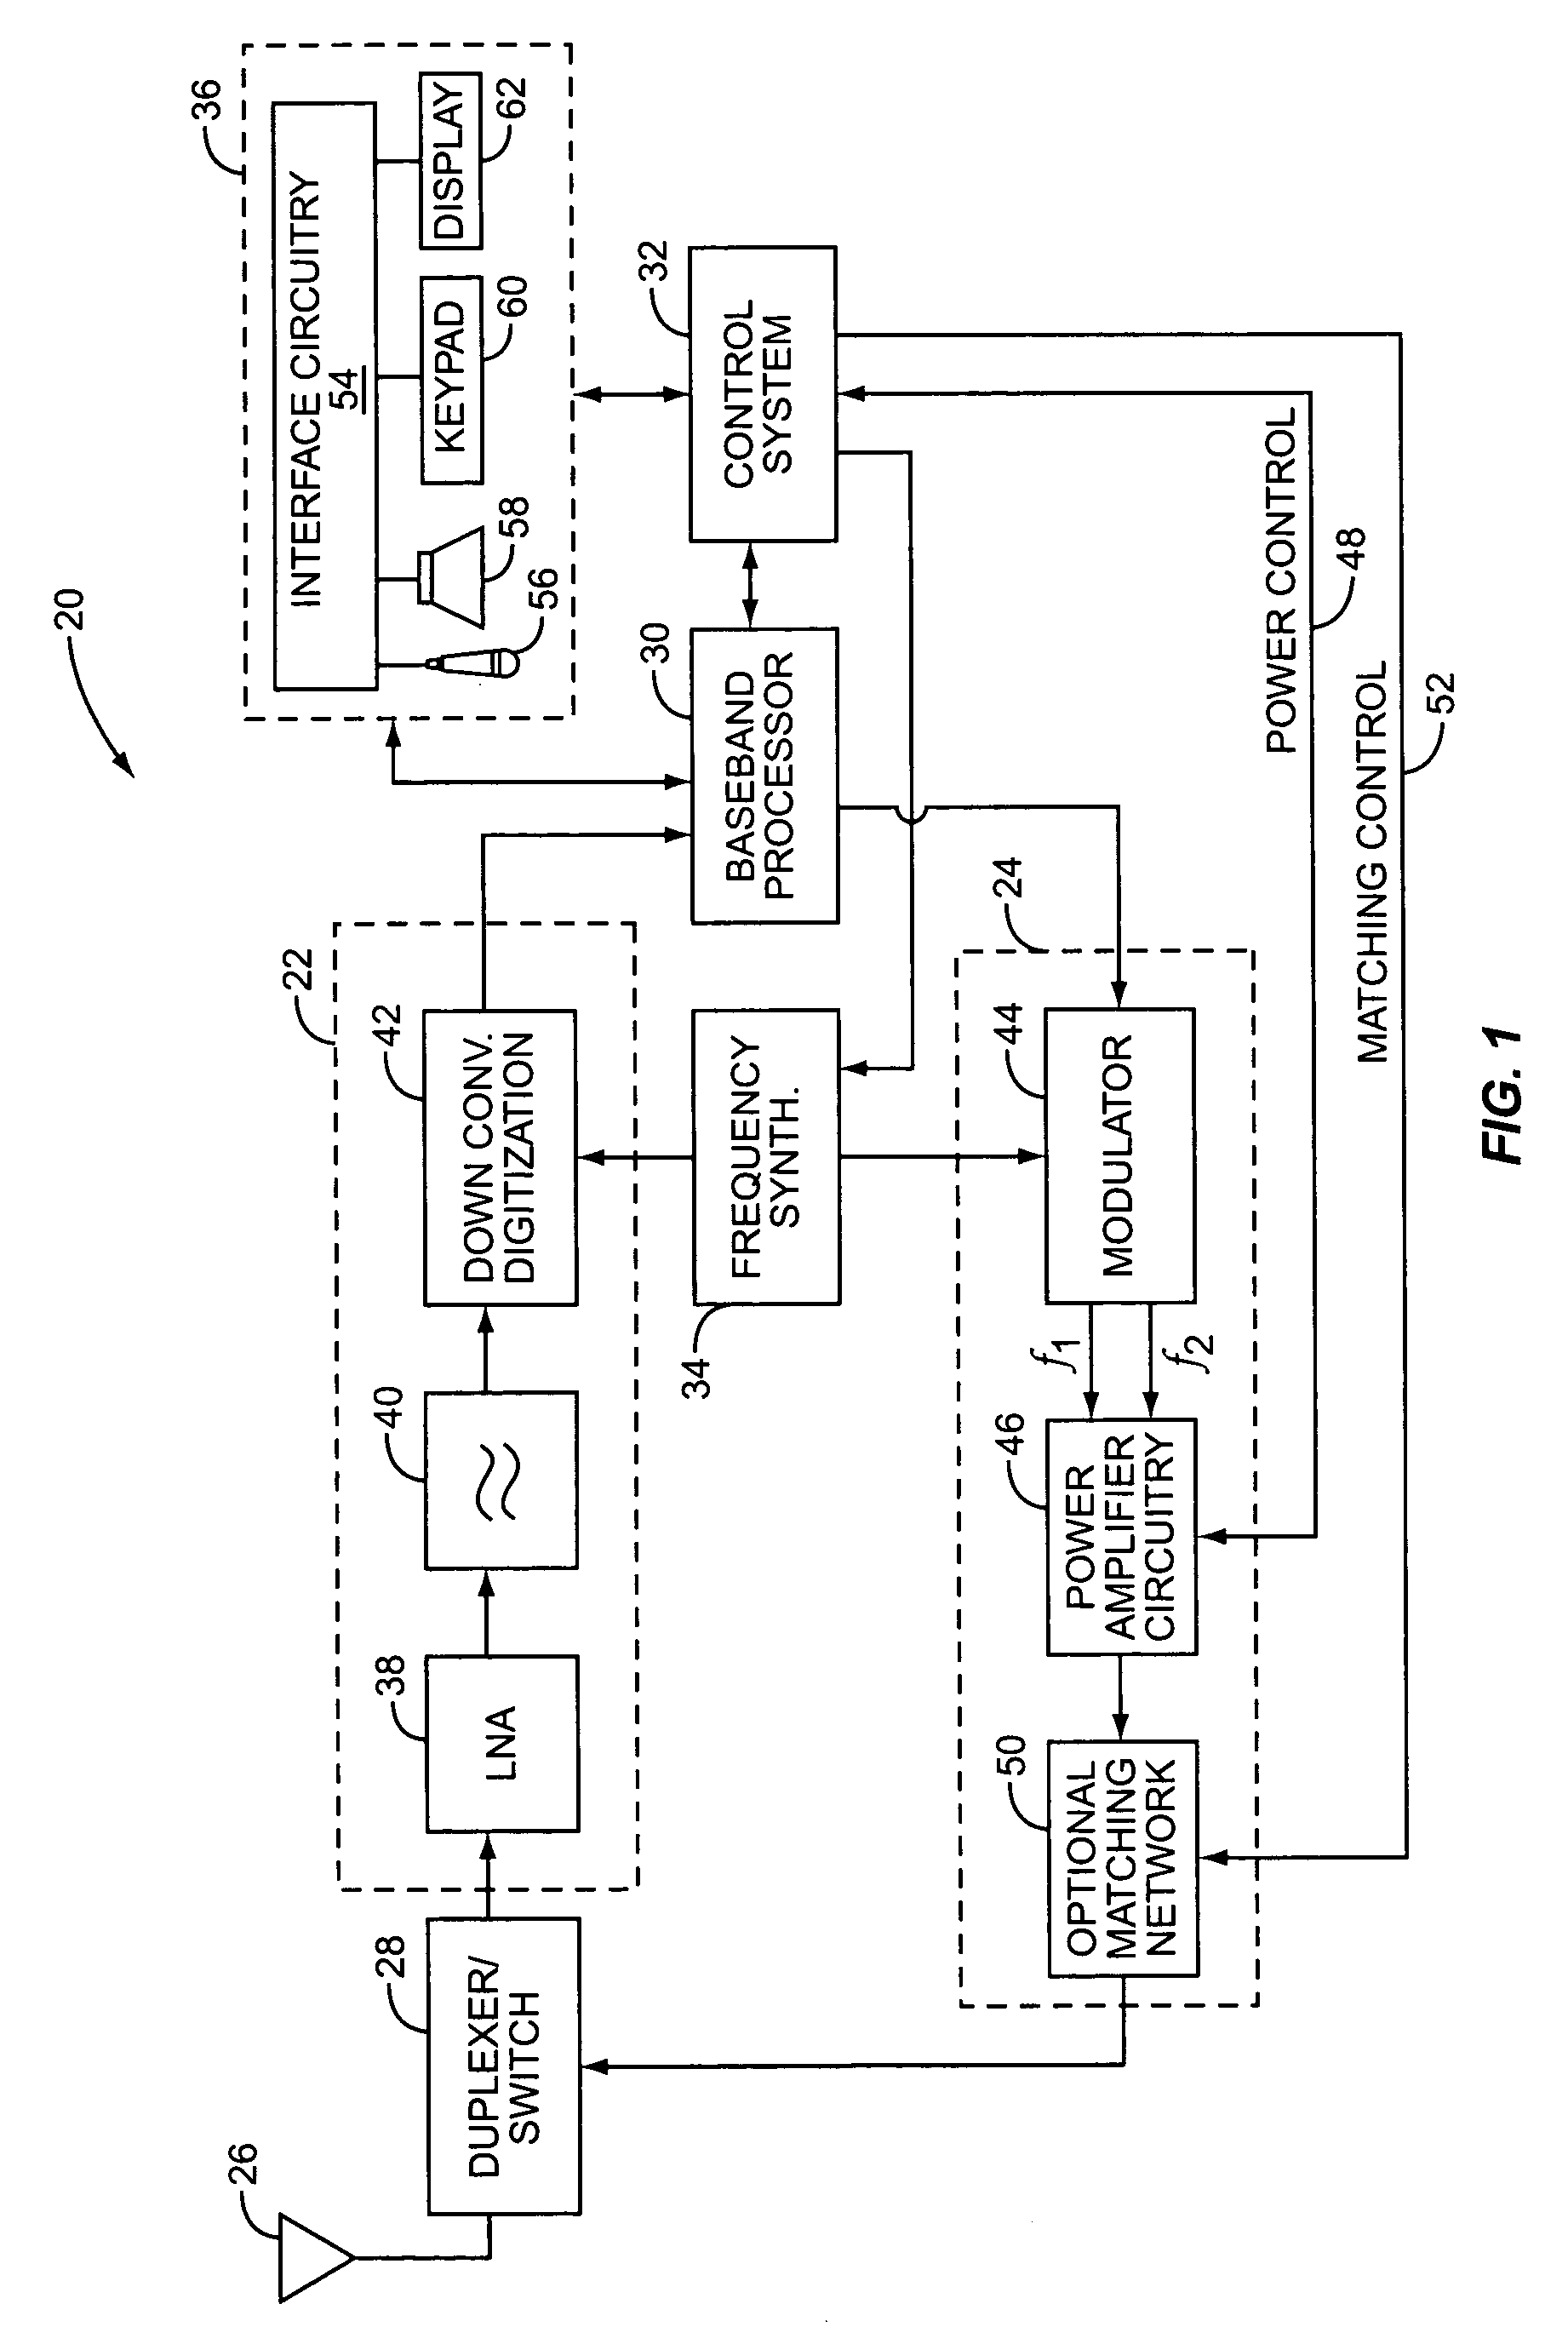 Multi-mode/multi-band power amplifier